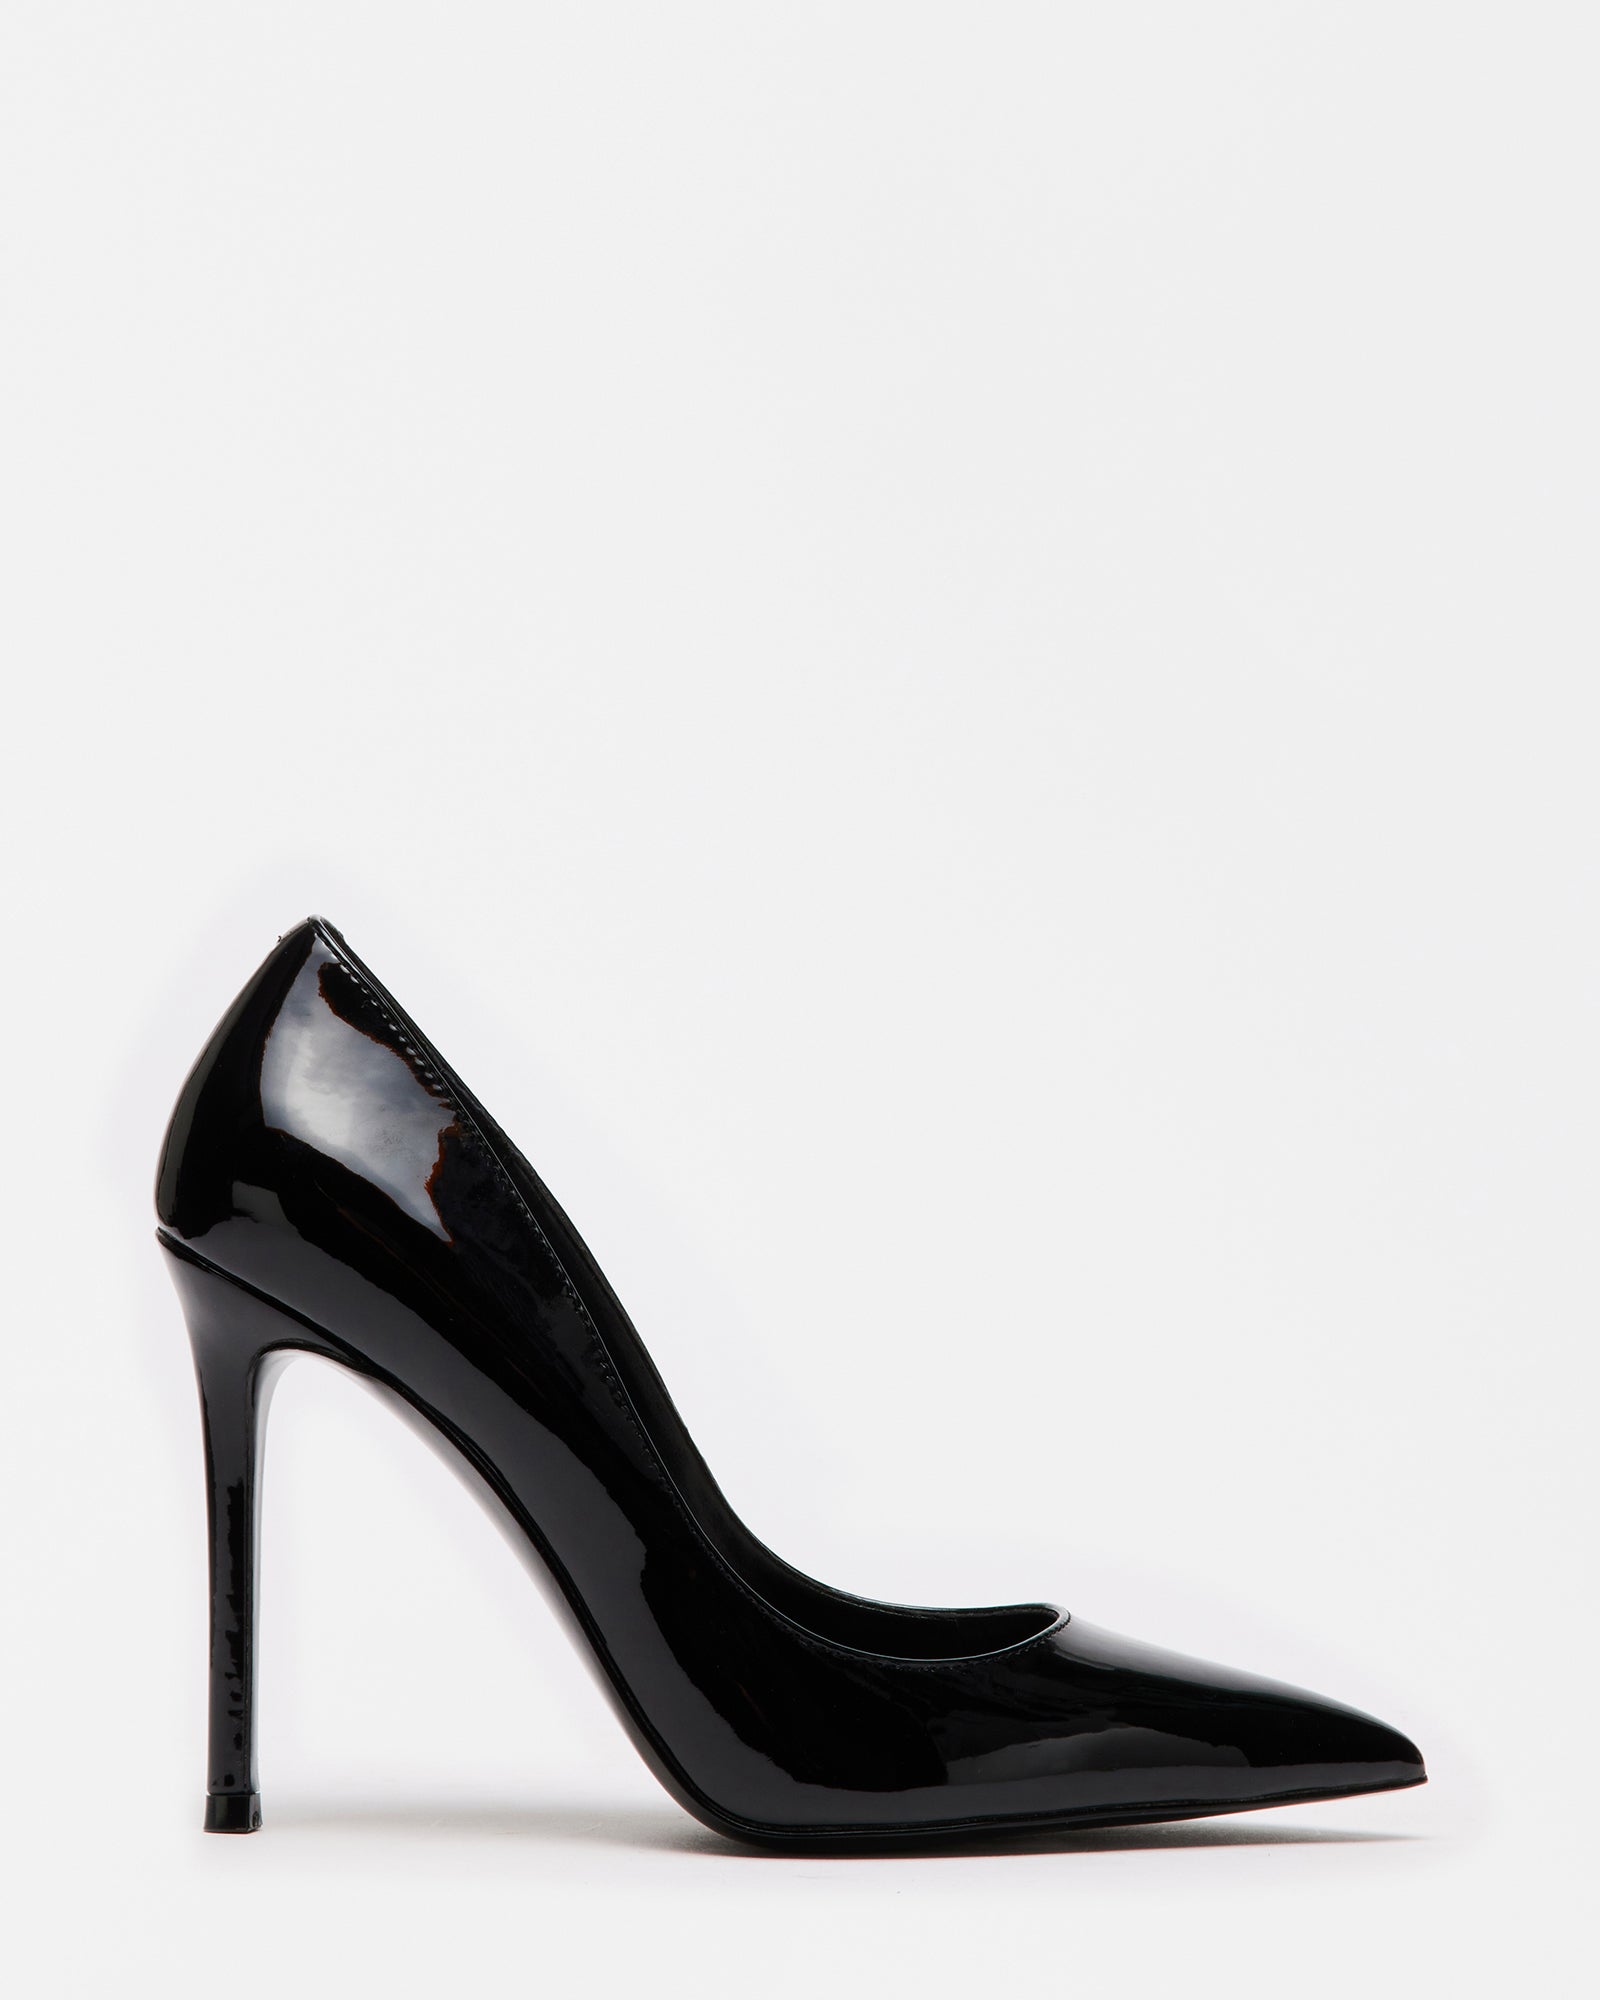 Stessy Women's Black Pumps | Aldo Shoes